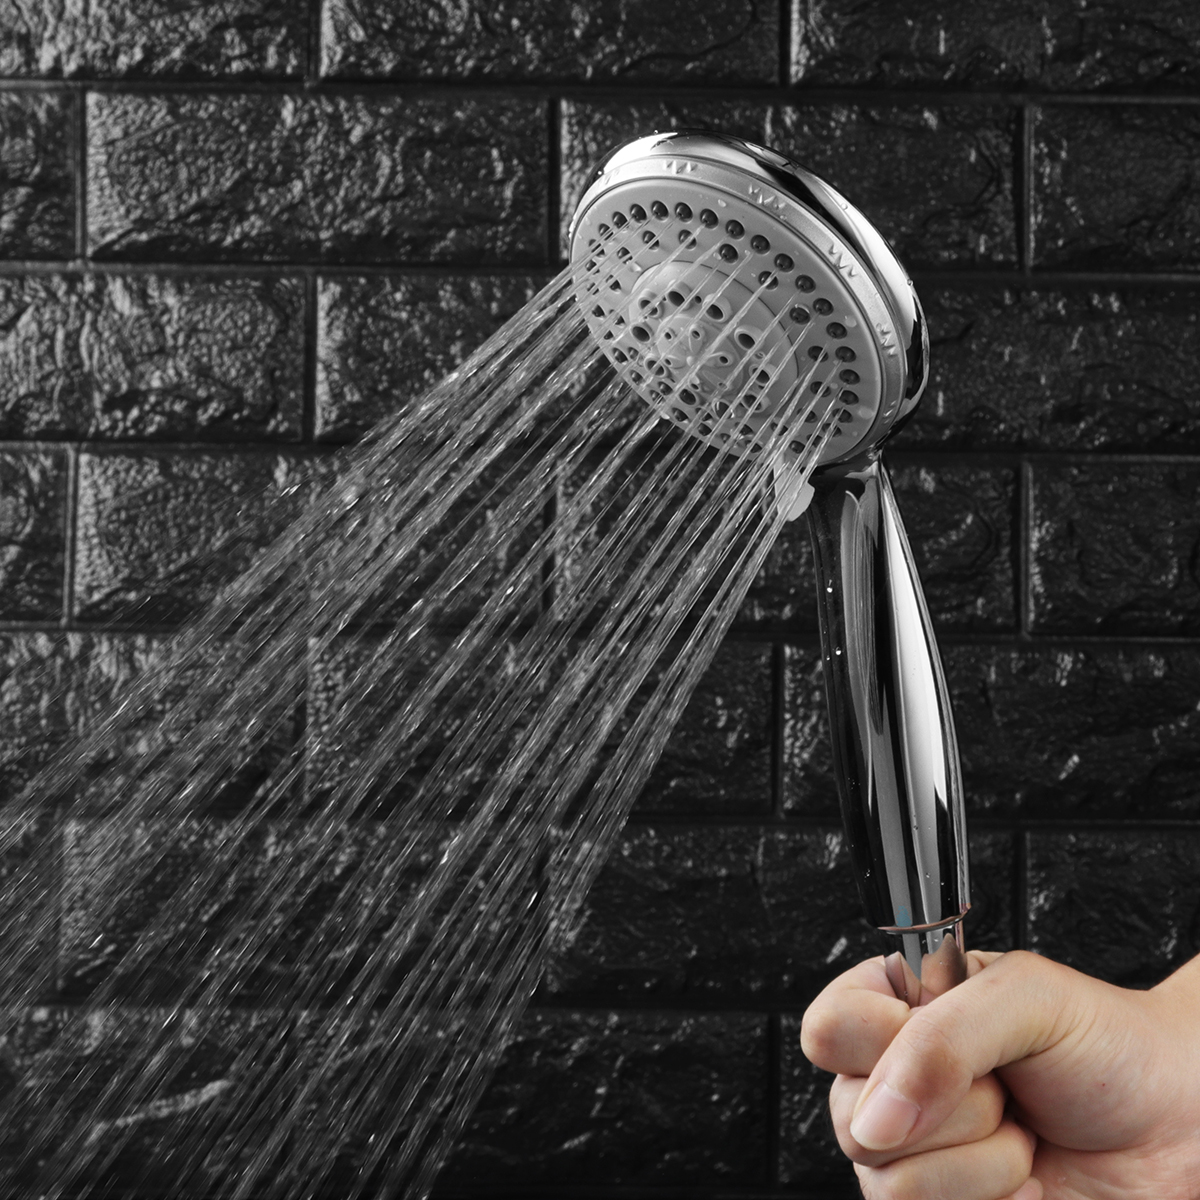 Adjustable-Shower-Head-Bathroom-Handheld-Five-Shower-Modes-Showerhead-Wall-Mounted-1398090